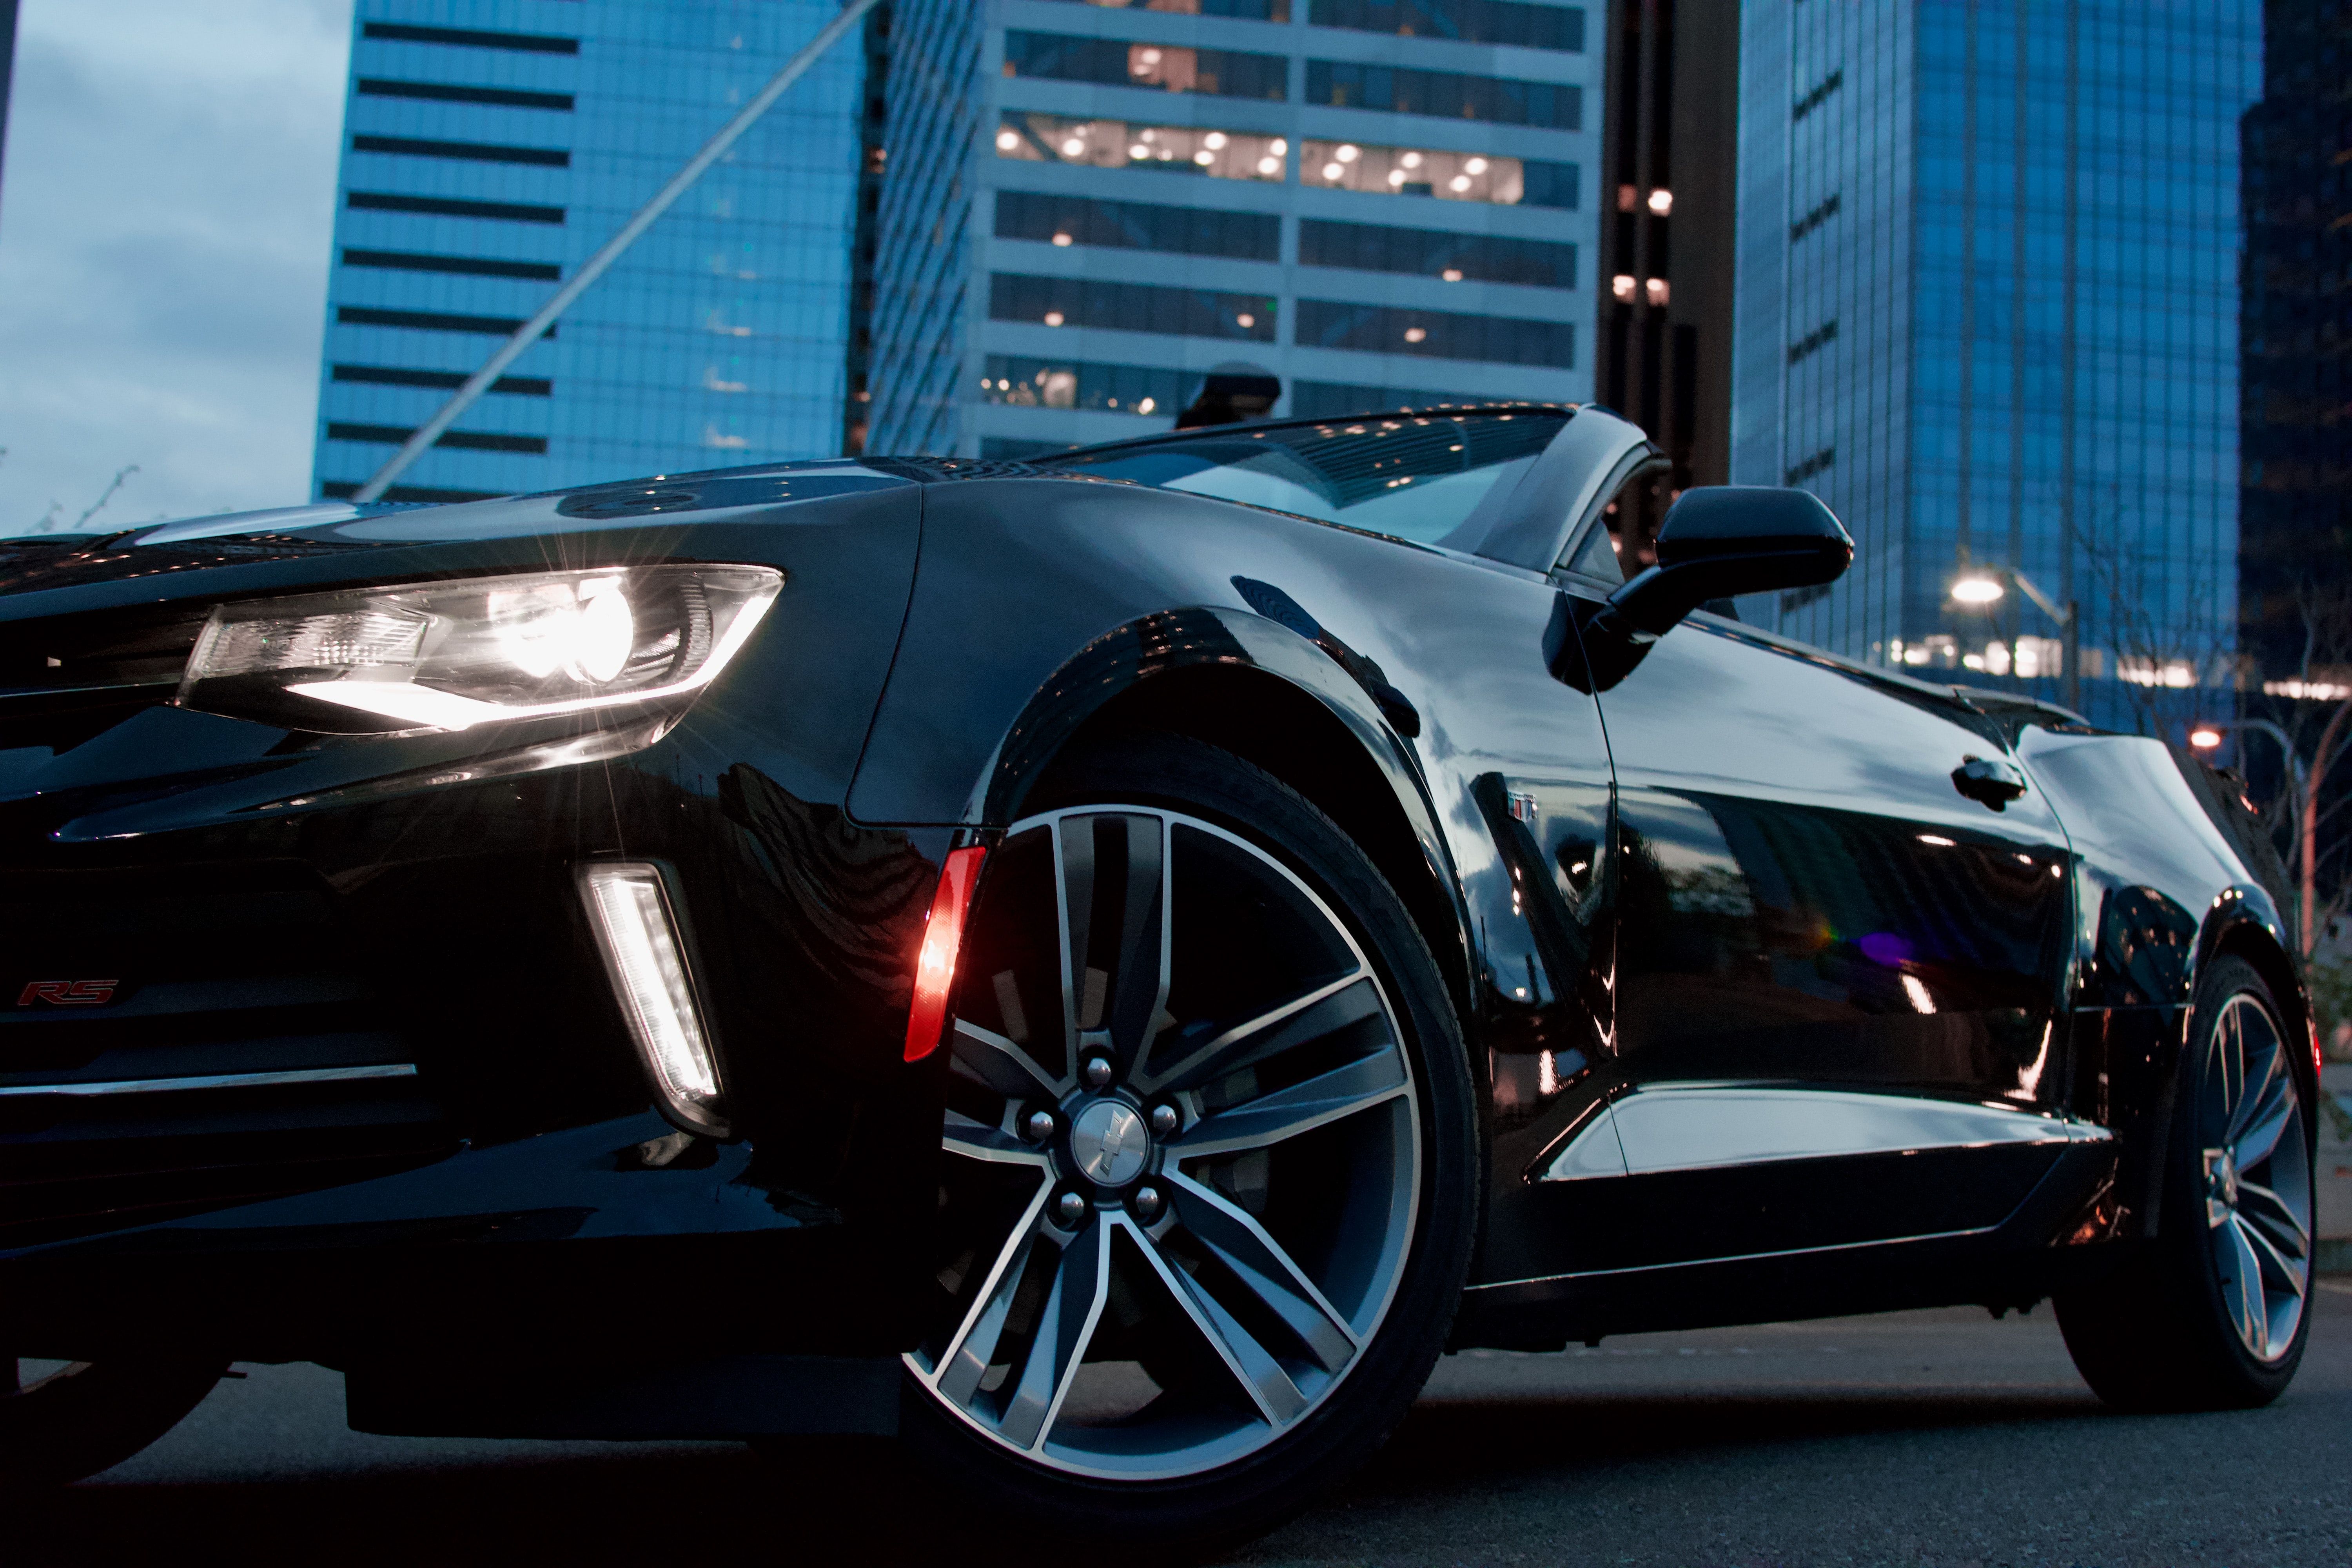 shiny black sports car with a city backdrop